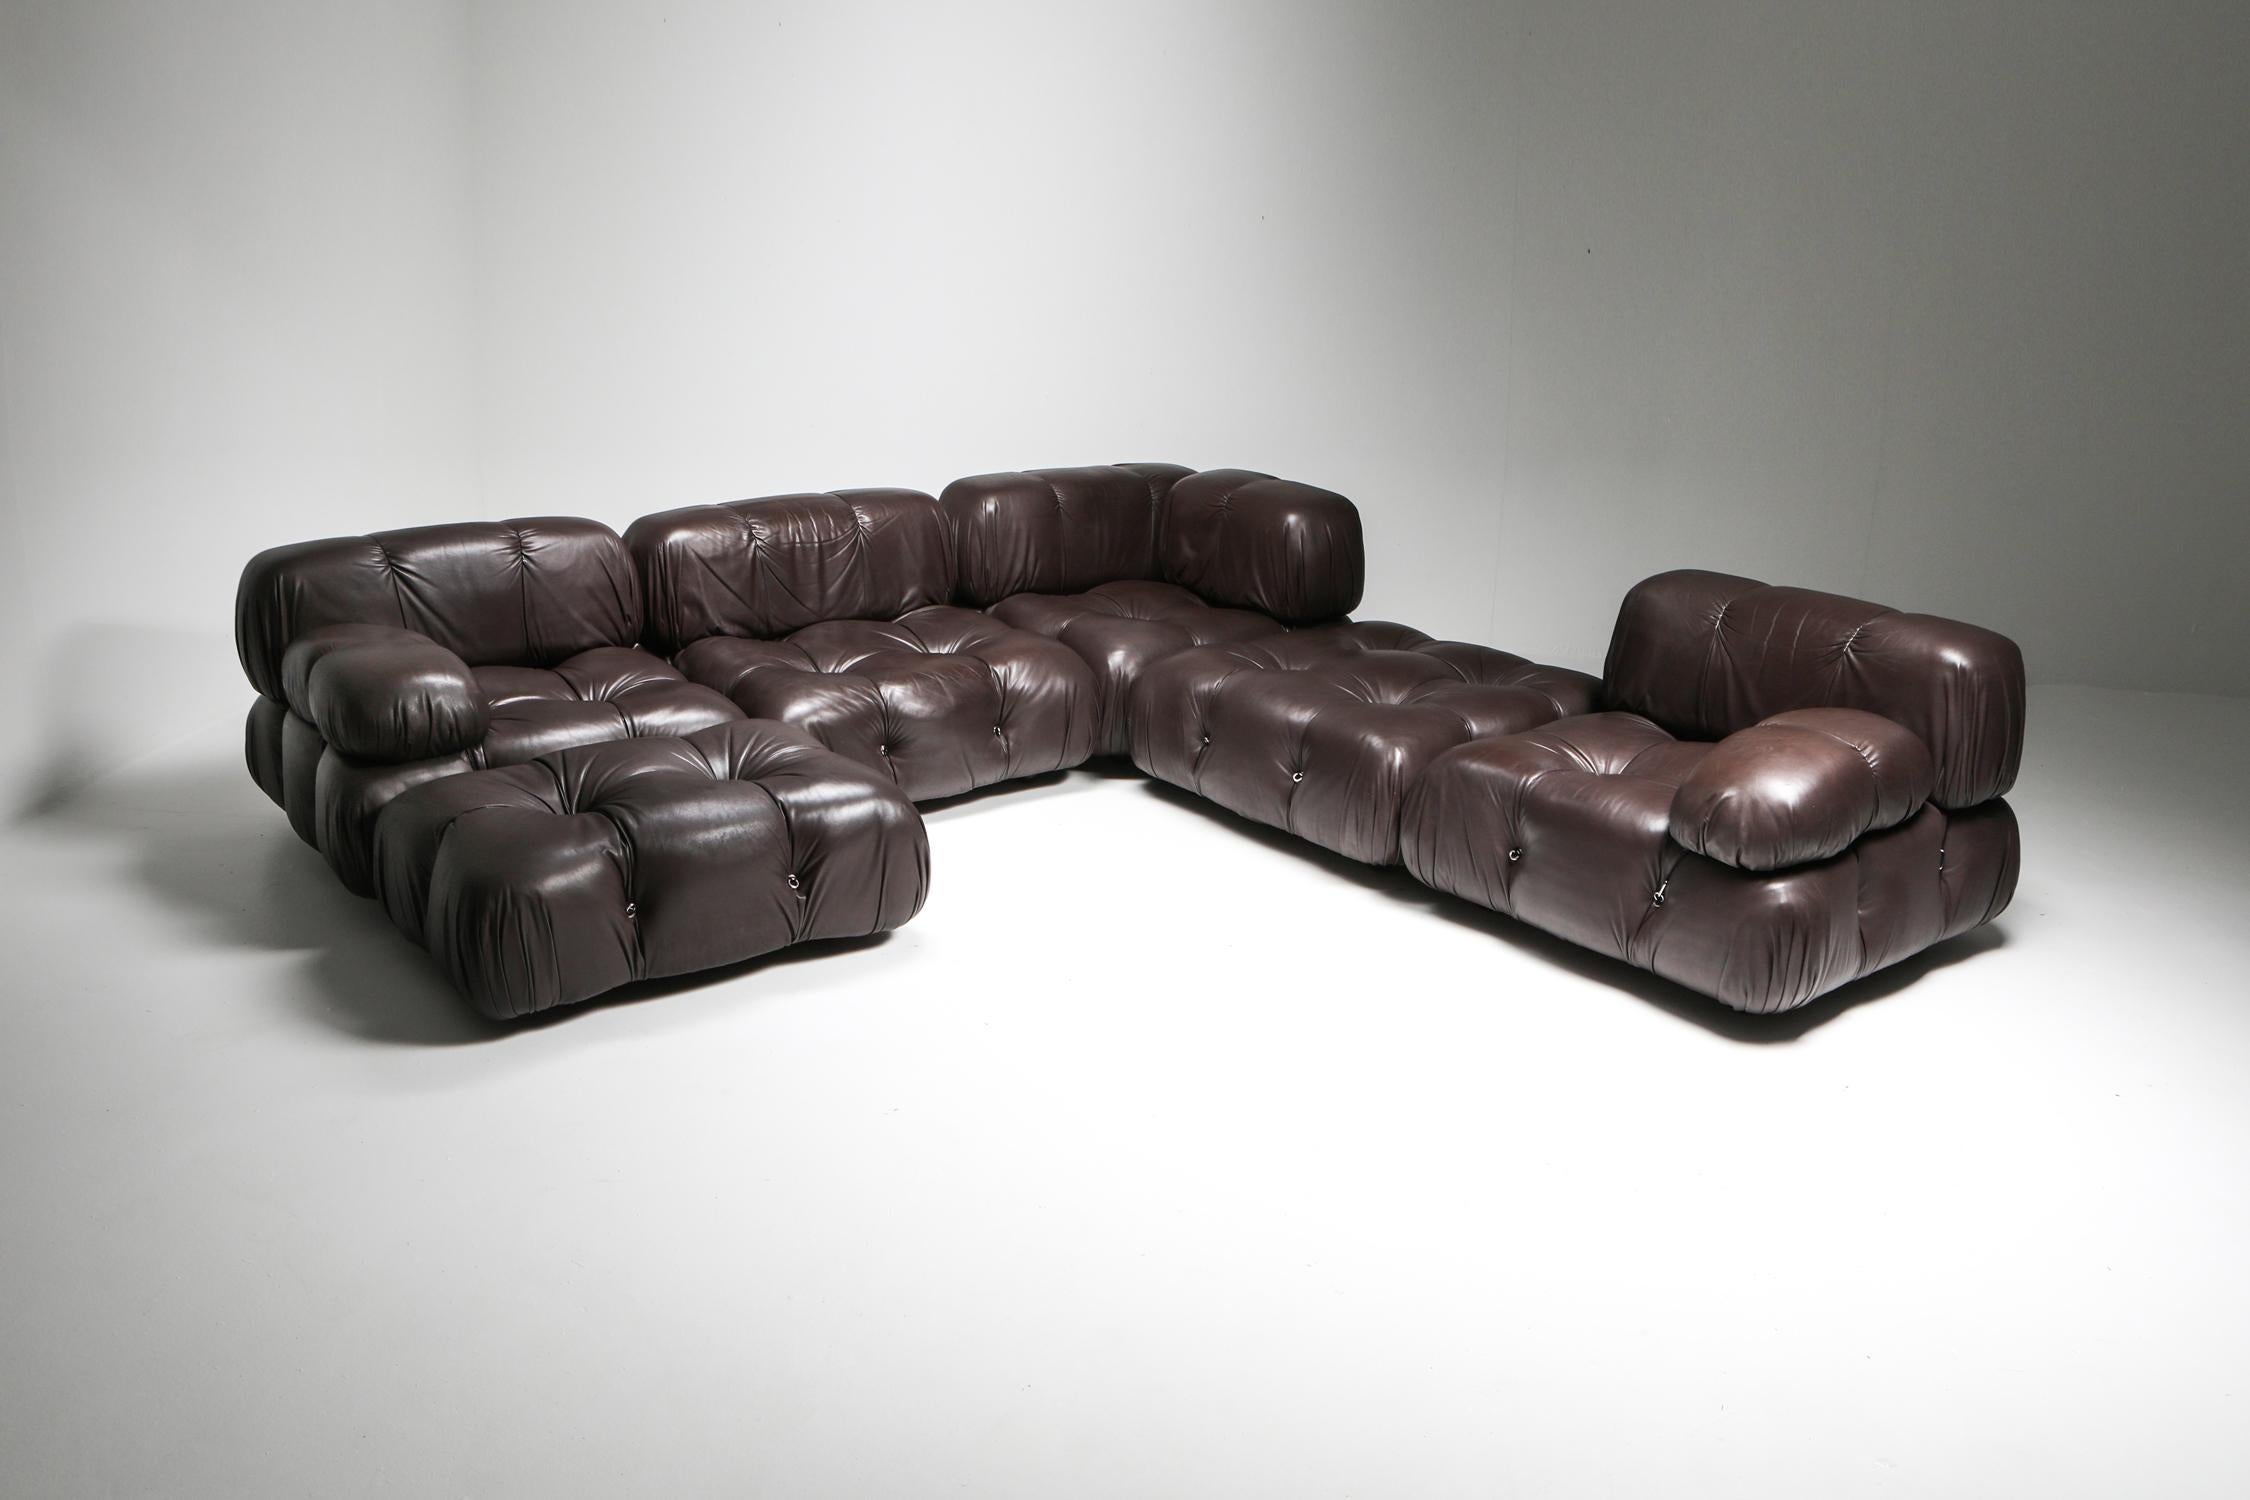 Post-Modern Mario Bellini's Camaleonda Original Sectional Sofa in Chocolate Brown Leather